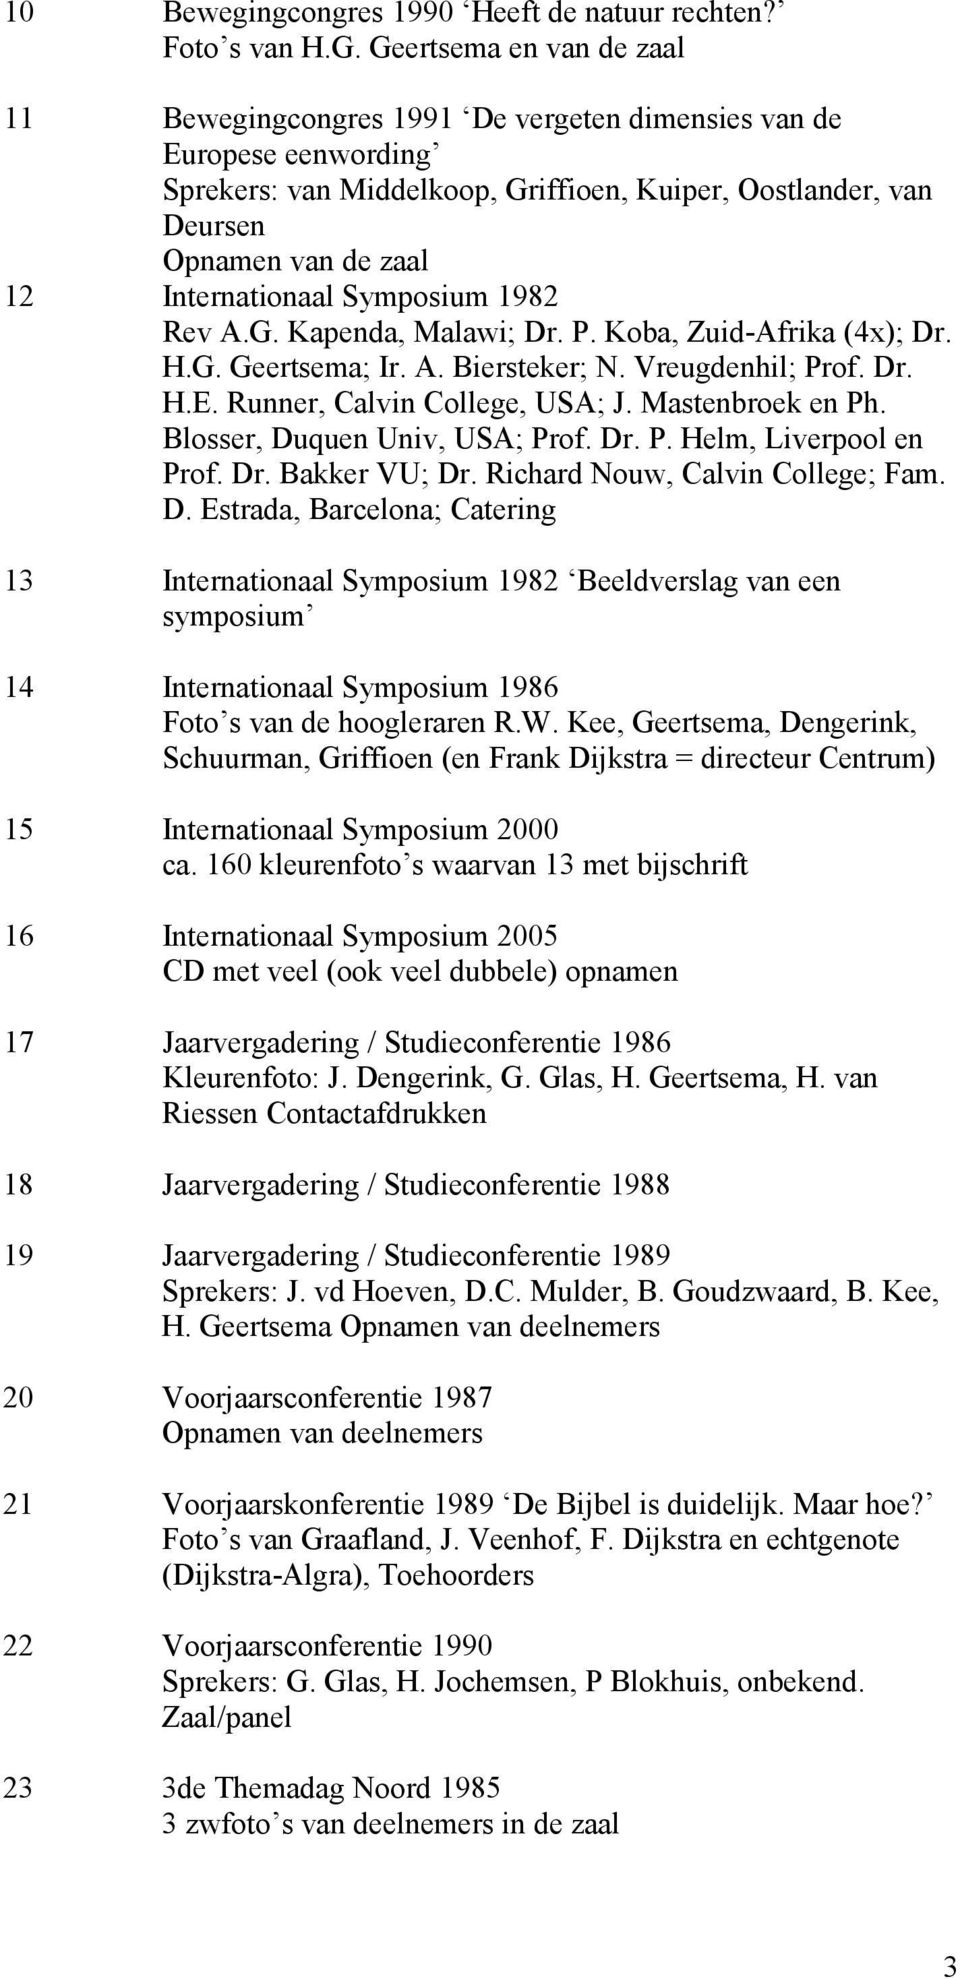 Internationaal Symposium 1982 Rev A.G. Kapenda, Malawi; Dr. P. Koba, Zuid-Afrika (4x); Dr. H.G. Geertsema; Ir. A. Biersteker; N. Vreugdenhil; Prof. Dr. H.E. Runner, Calvin College, USA; J.